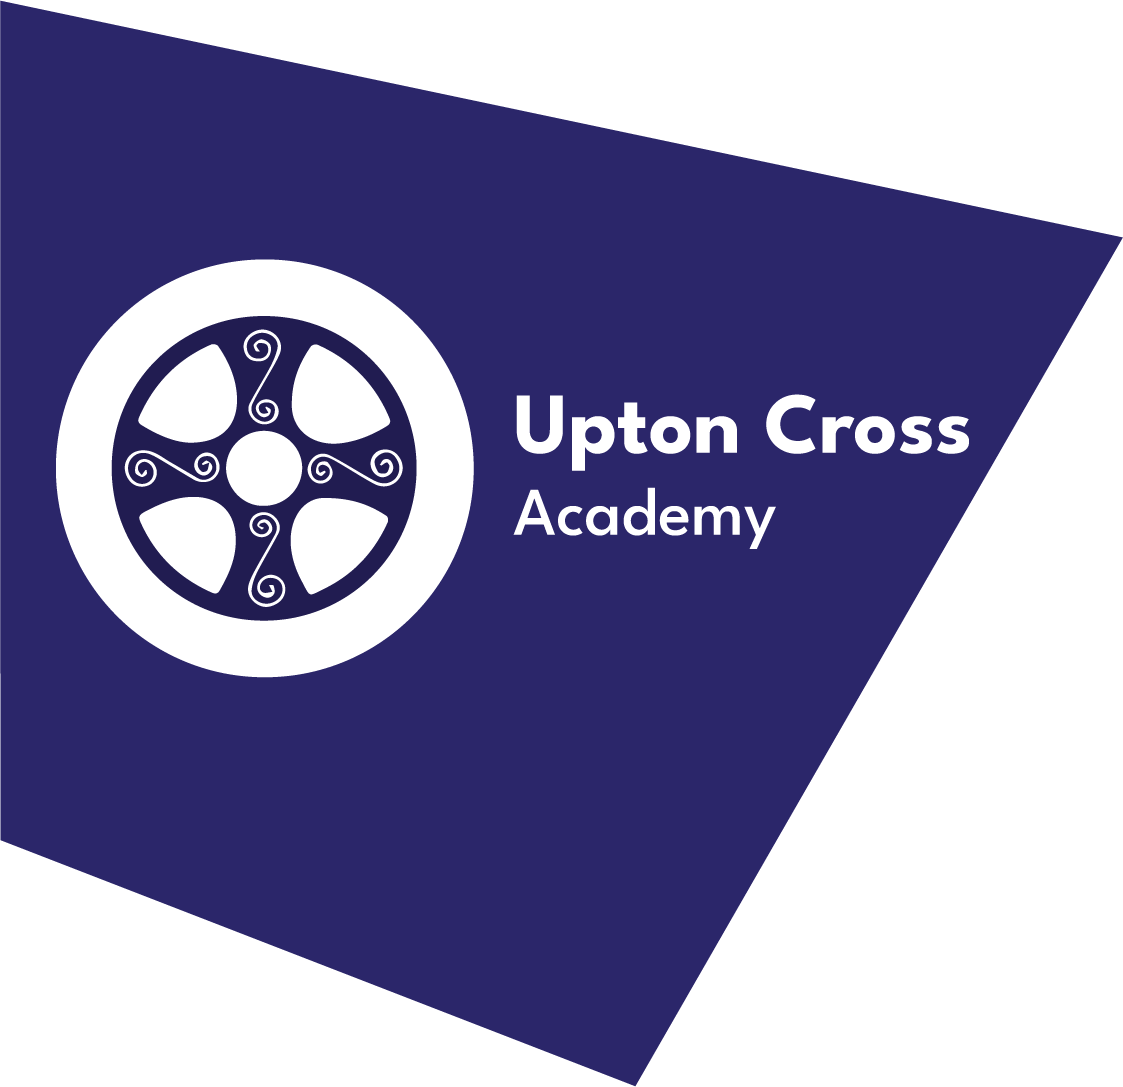 Upton Cross Academy